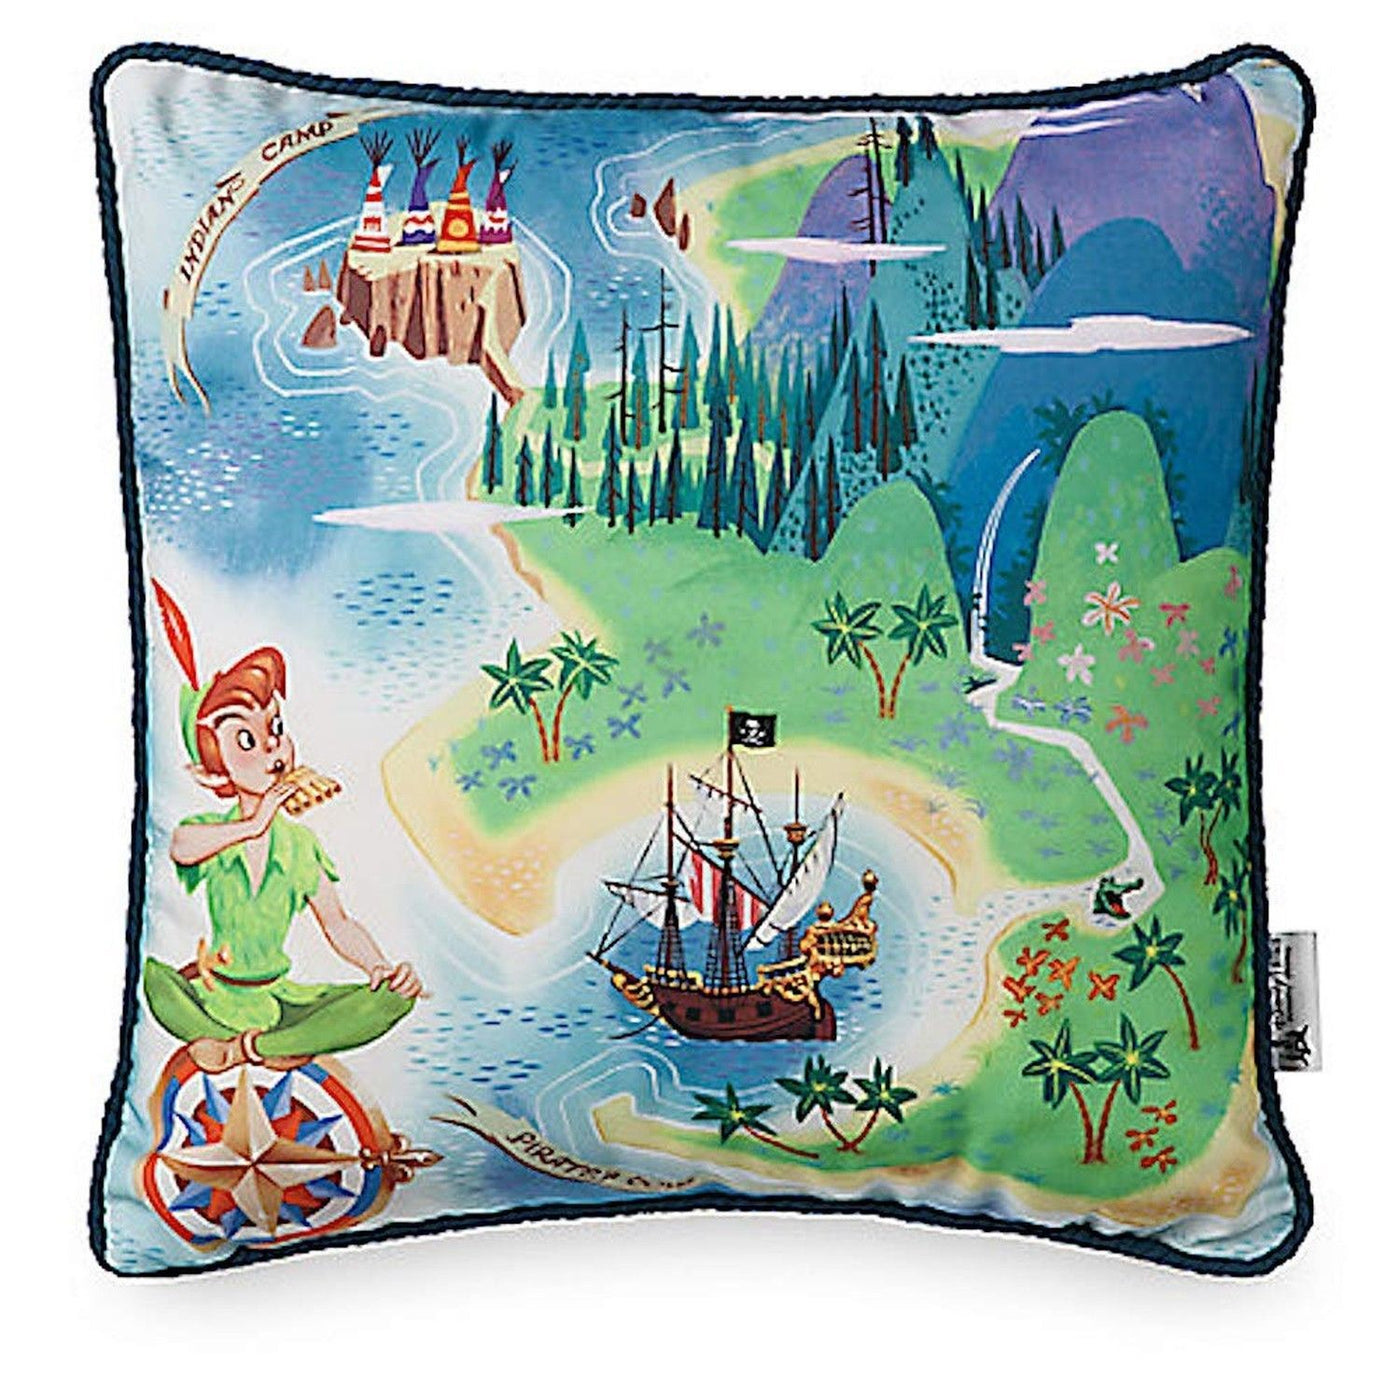 Disney Peter Pan Nerverland Pillow New With Tag